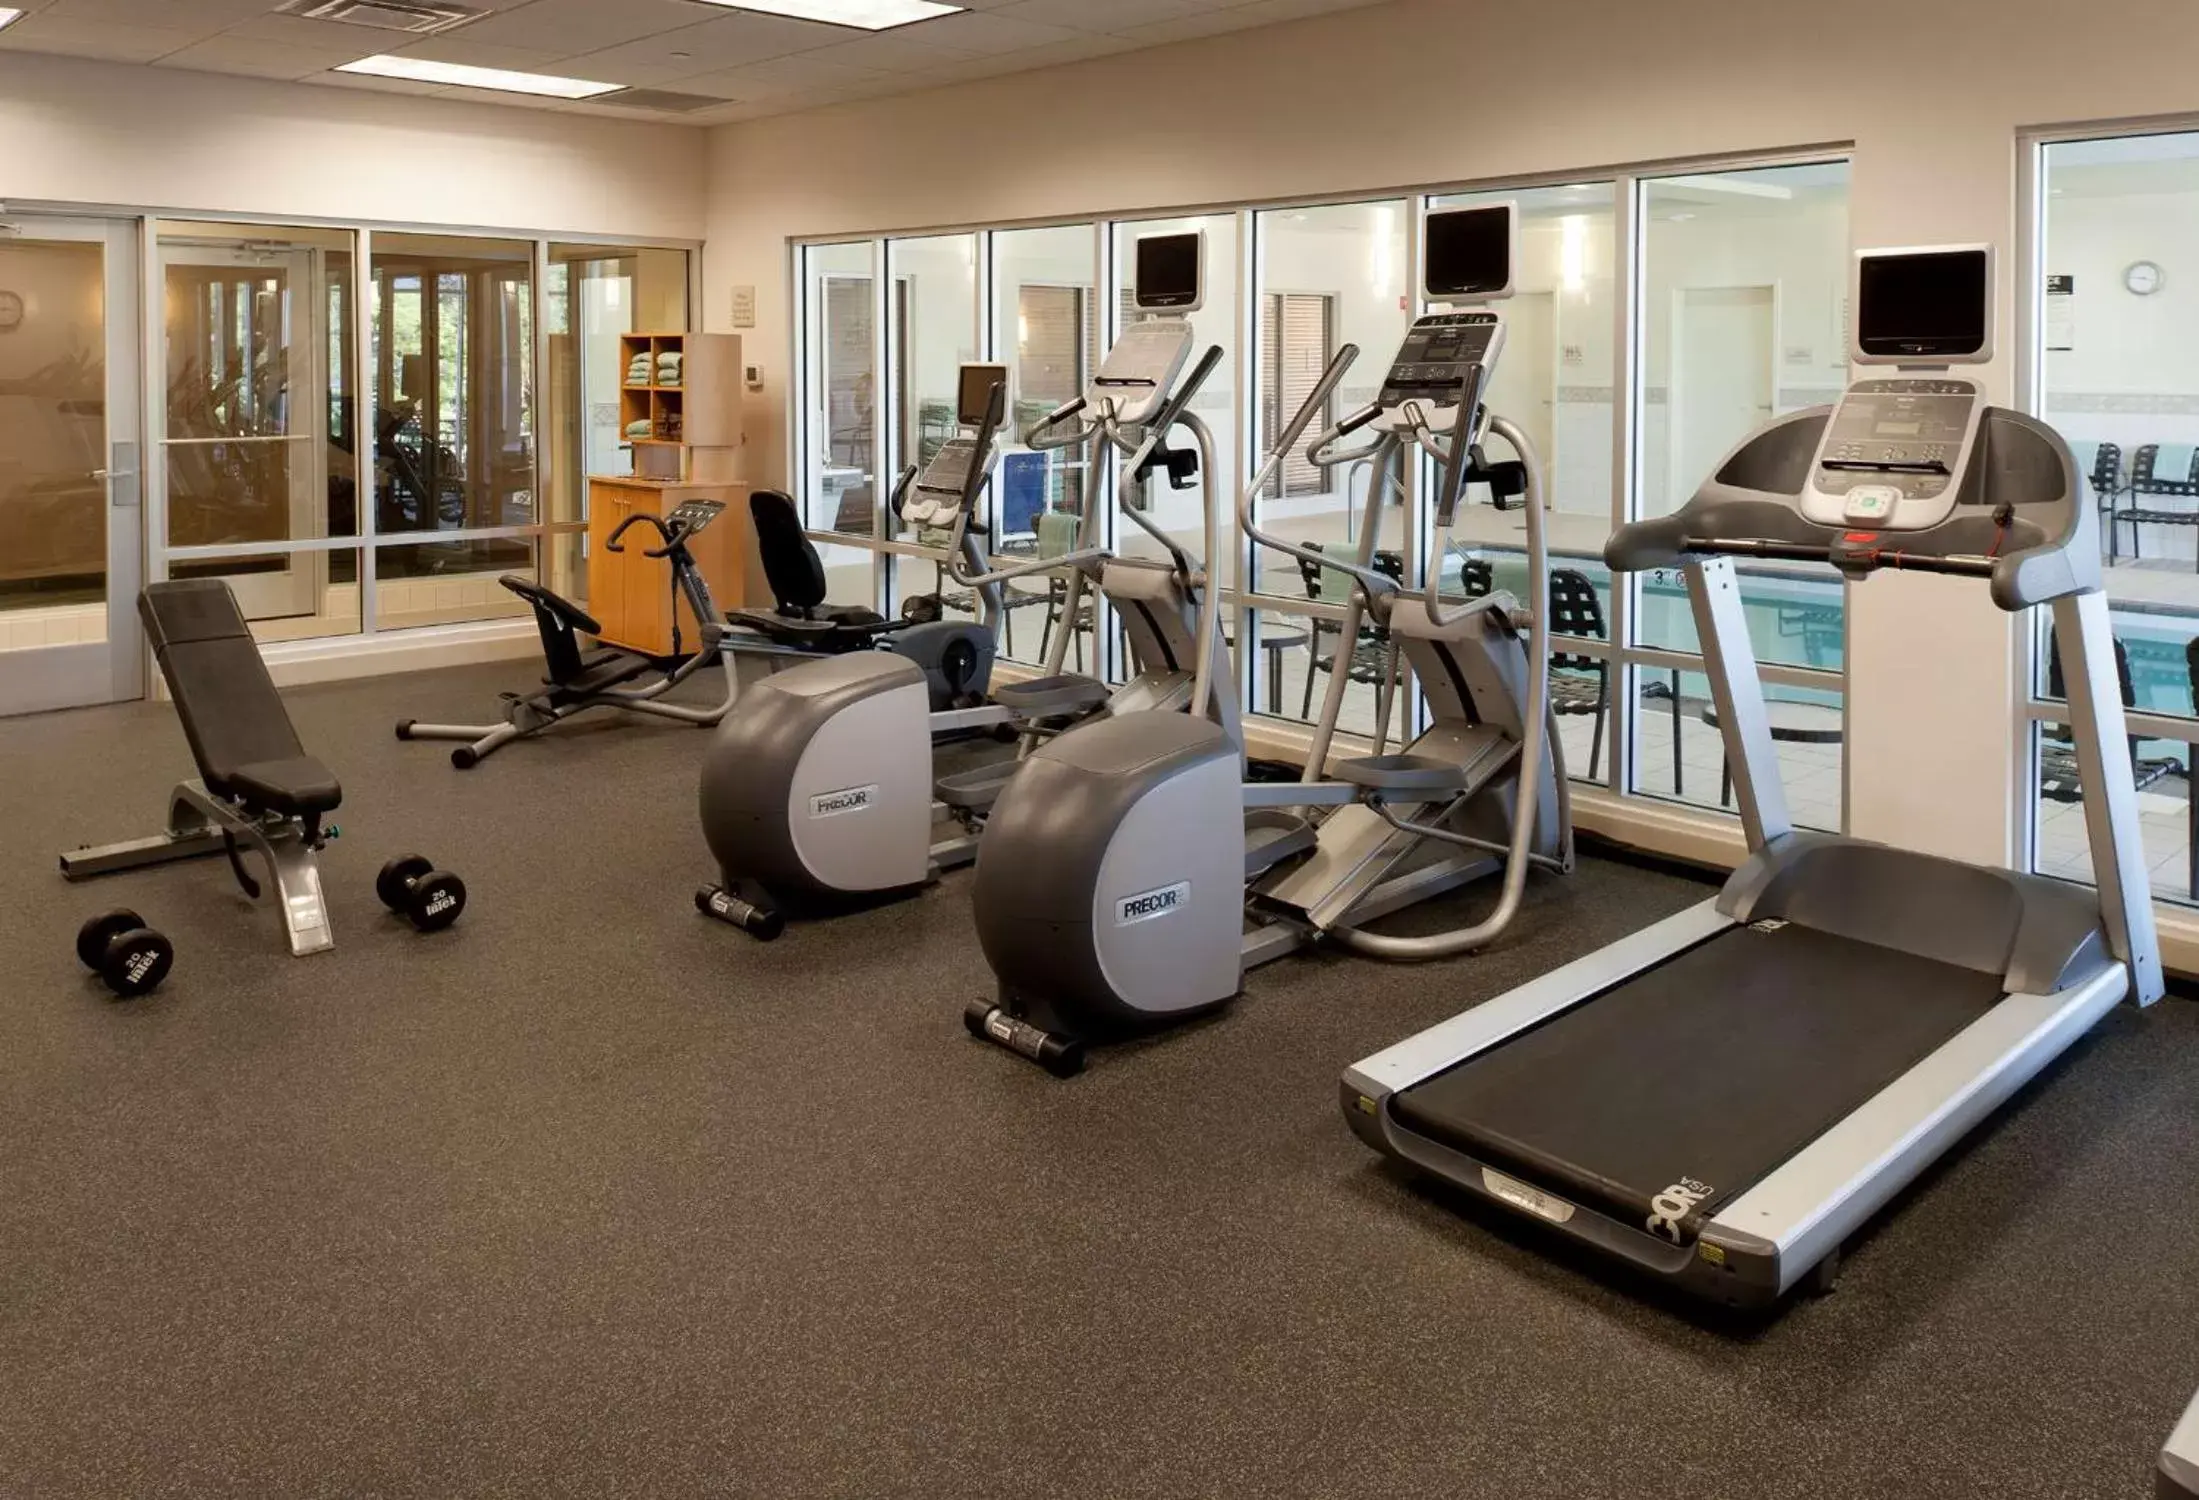 Fitness centre/facilities, Fitness Center/Facilities in Hilton Garden Inn Schaumburg